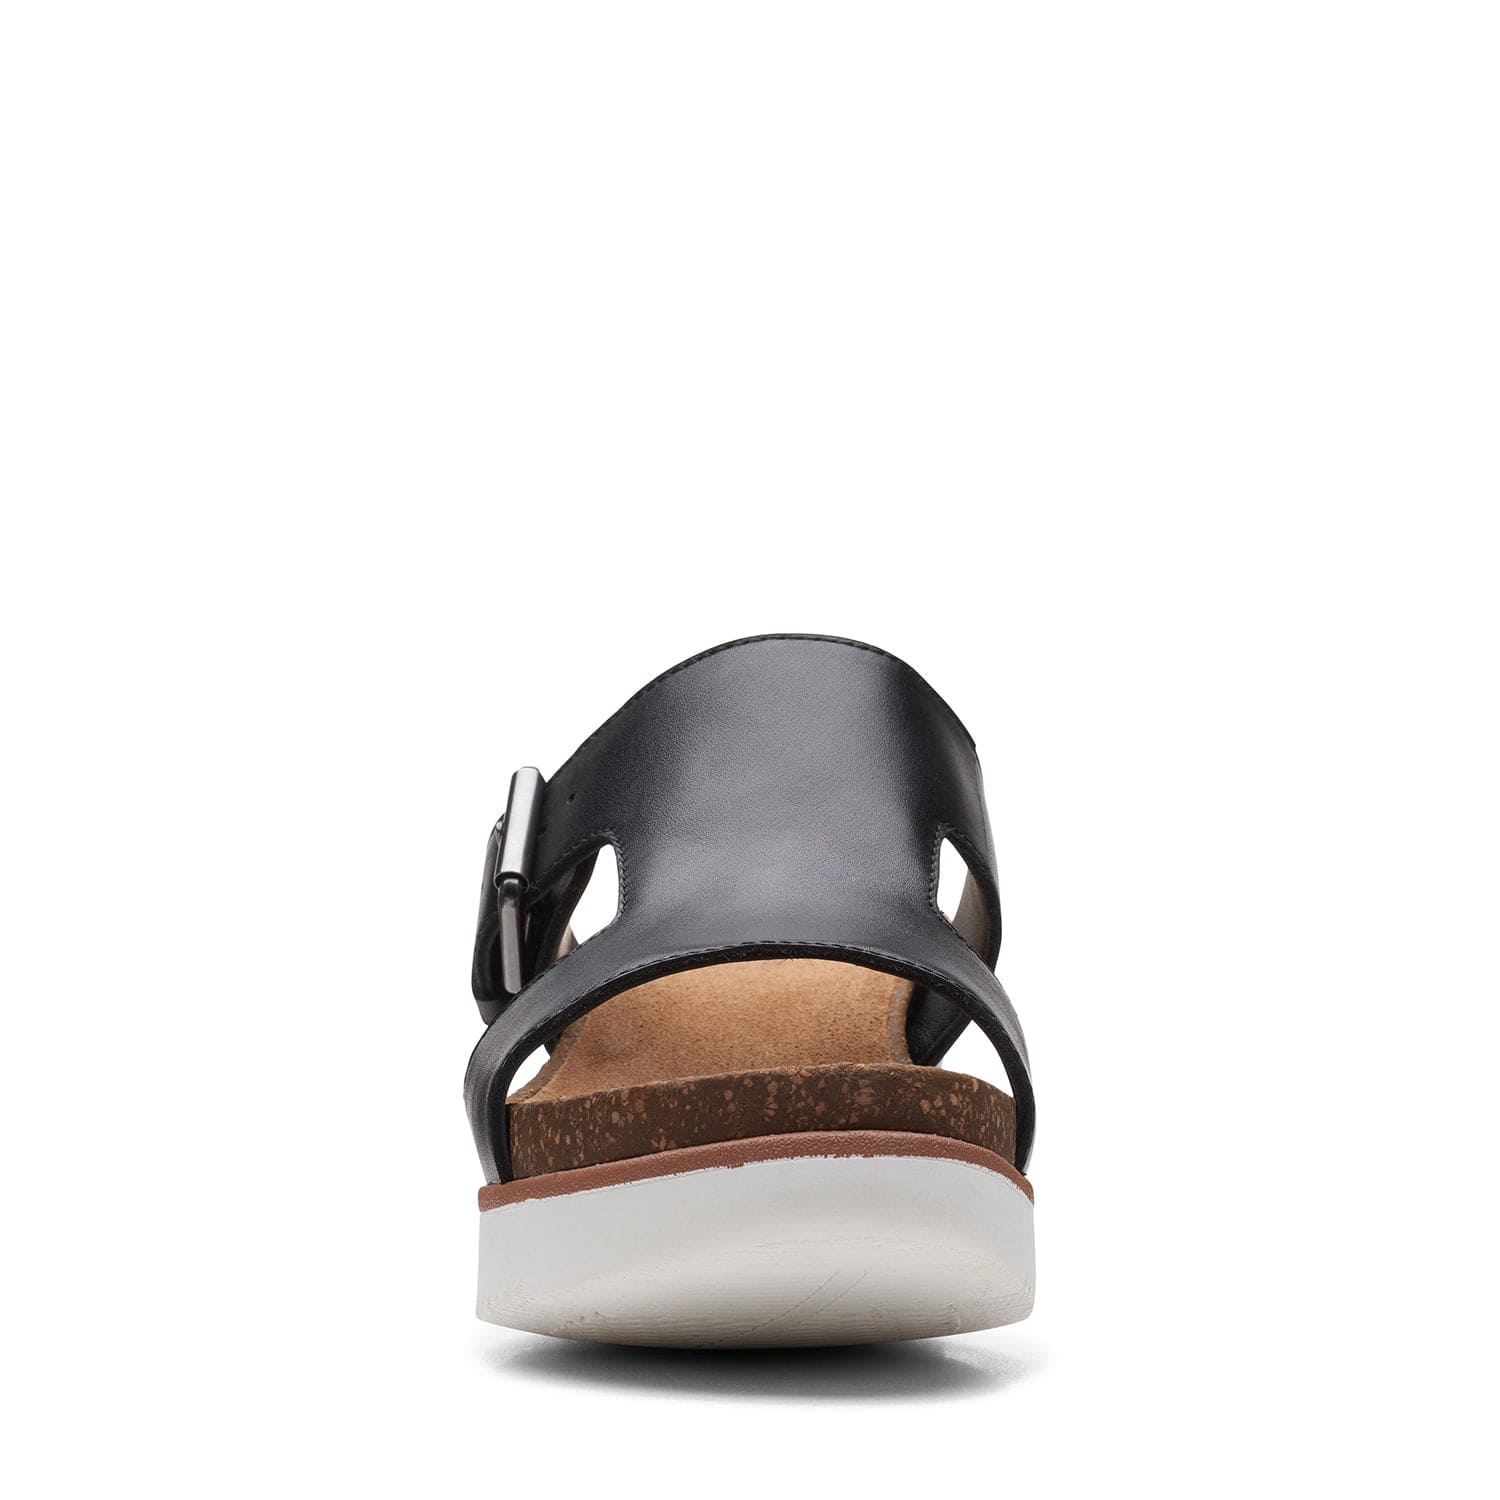 Clarks Lizby Ease - Sandals - Black Leather - 261590404 - D Width (Standard Fit)